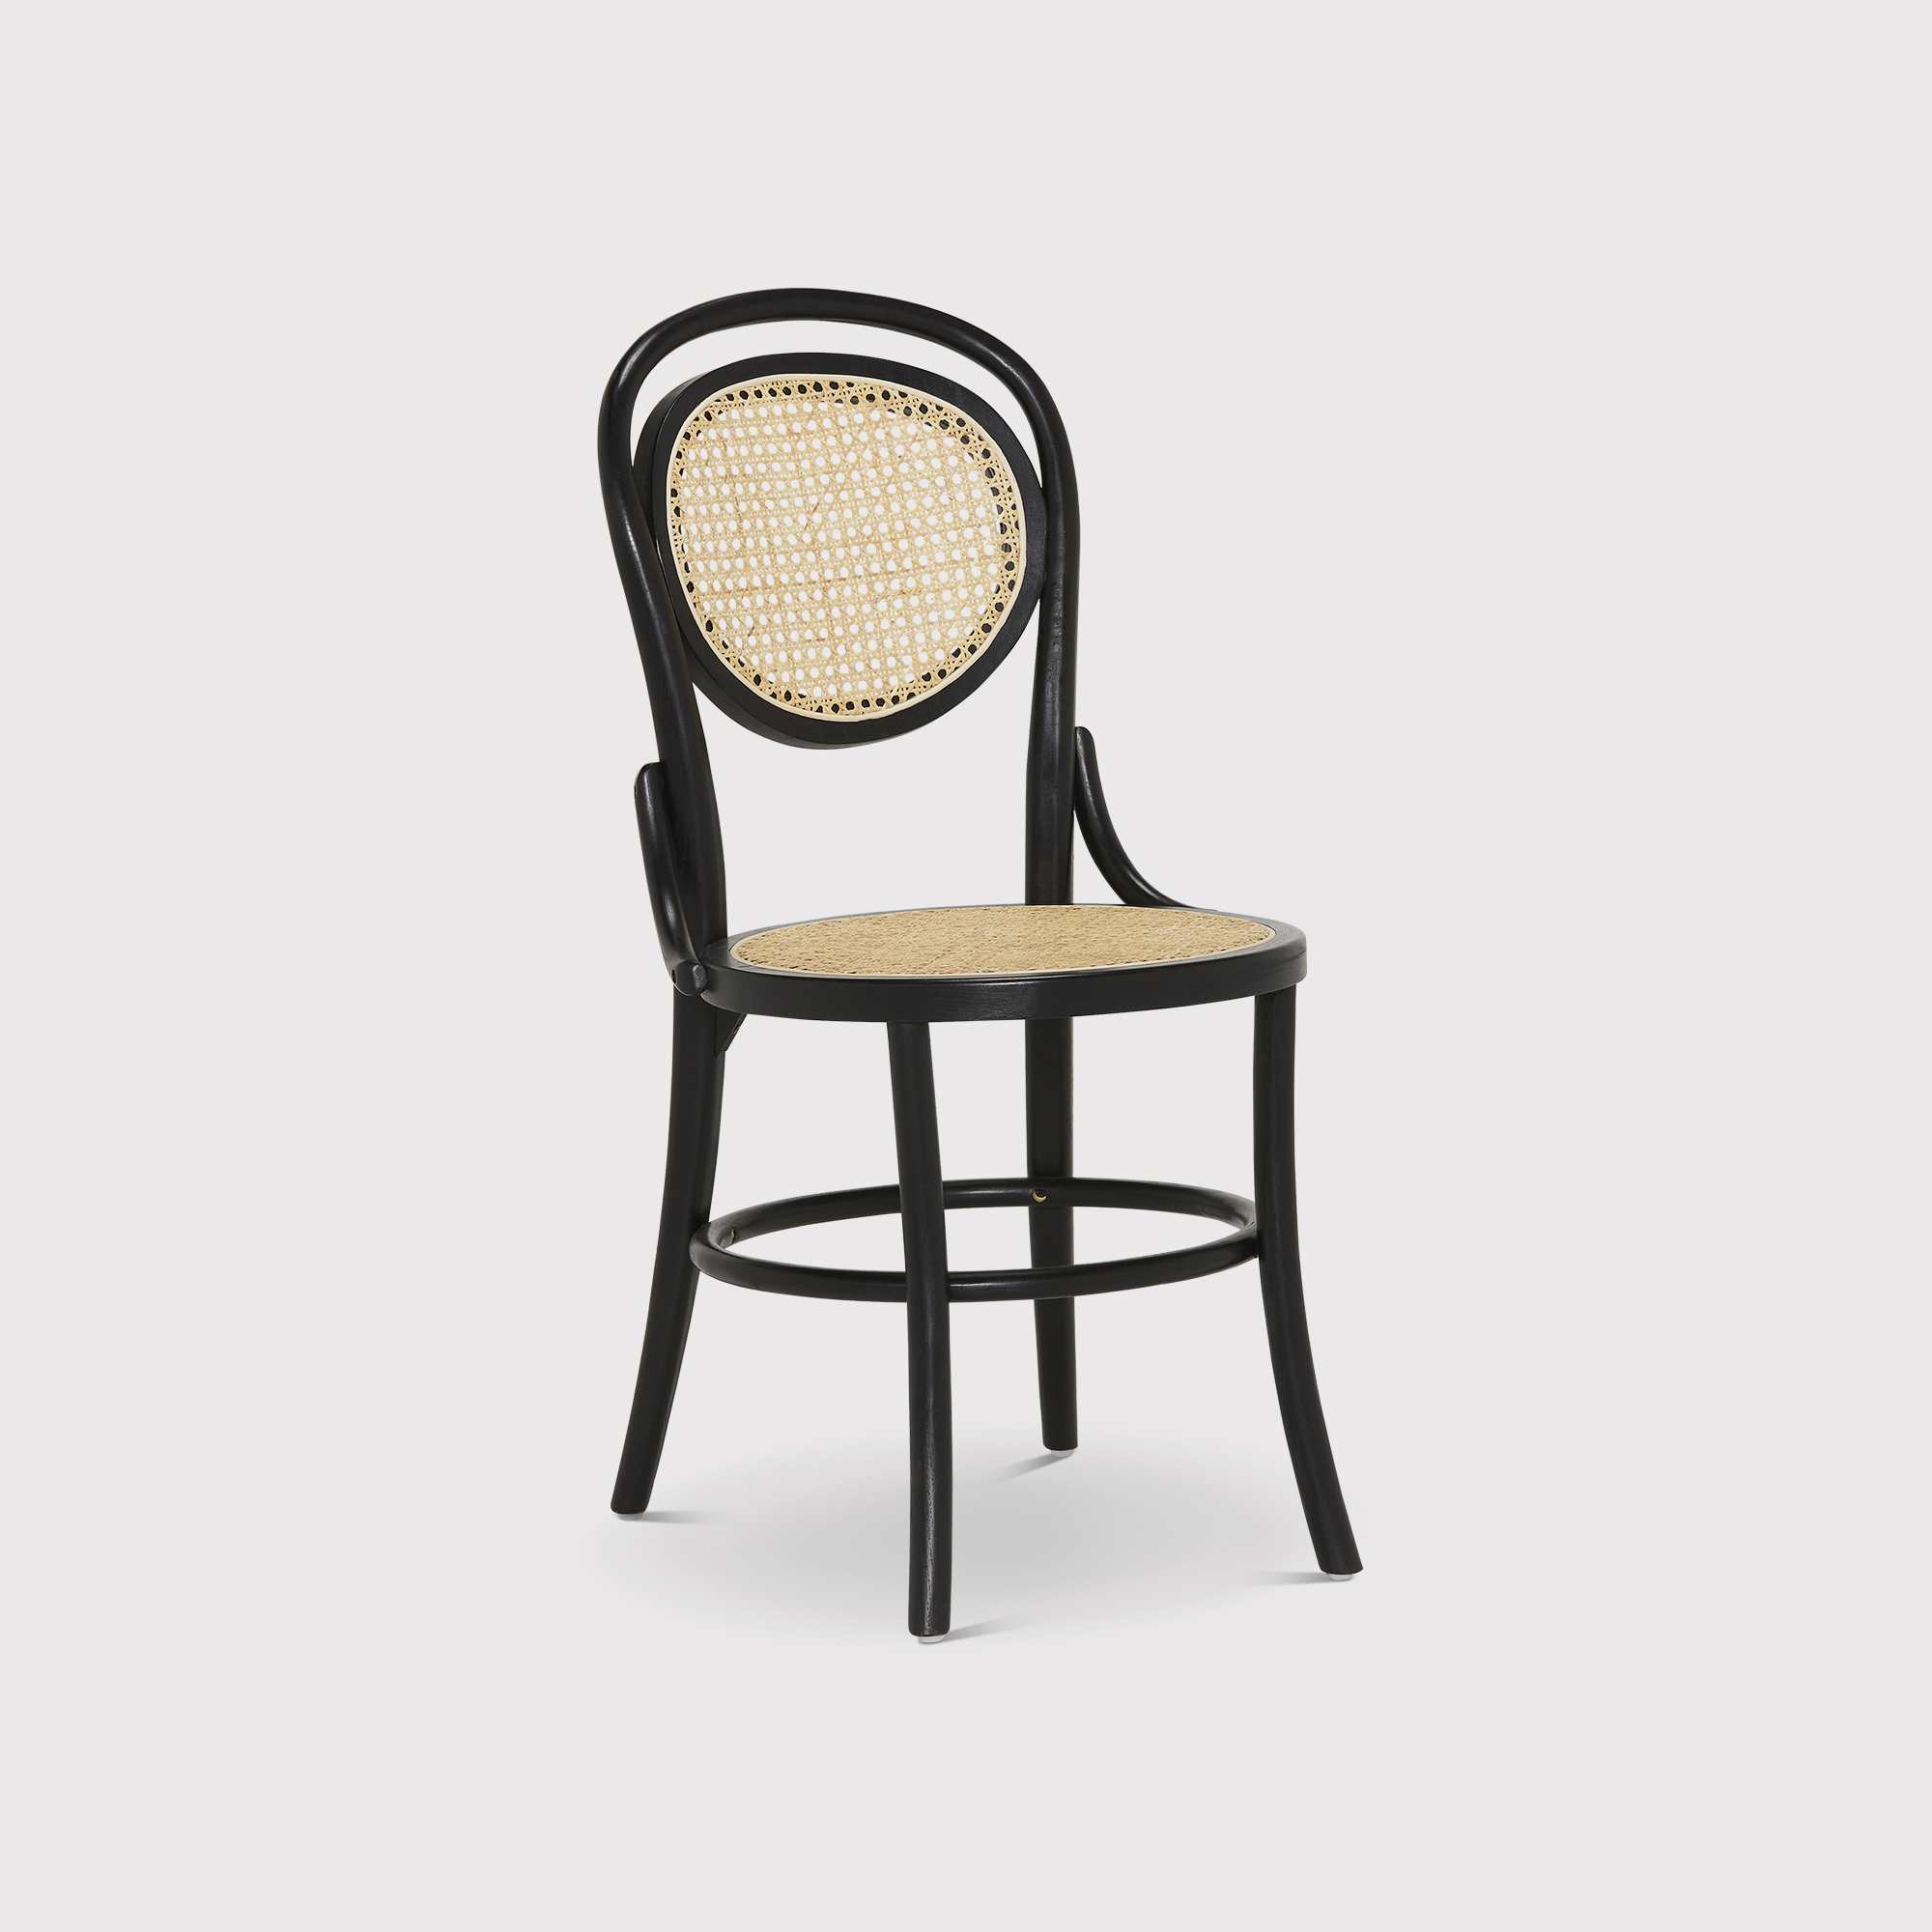 Raya Dining Chair, Black Rattan | Barker & Stonehouse